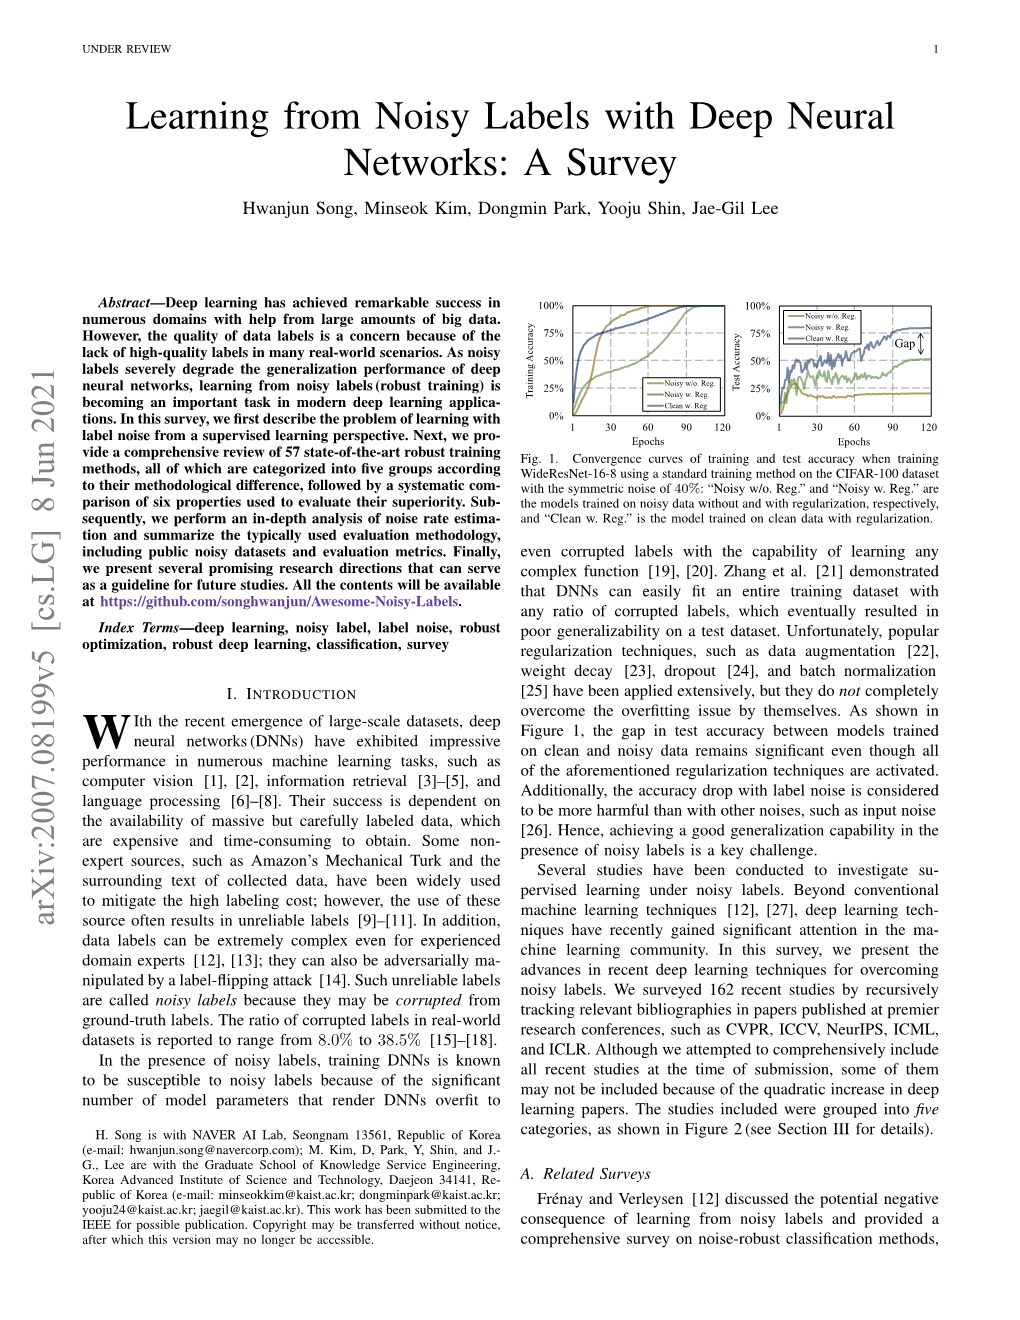 Learning from Noisy Labels with Deep Neural Networks: a Survey Hwanjun Song, Minseok Kim, Dongmin Park, Yooju Shin, Jae-Gil Lee